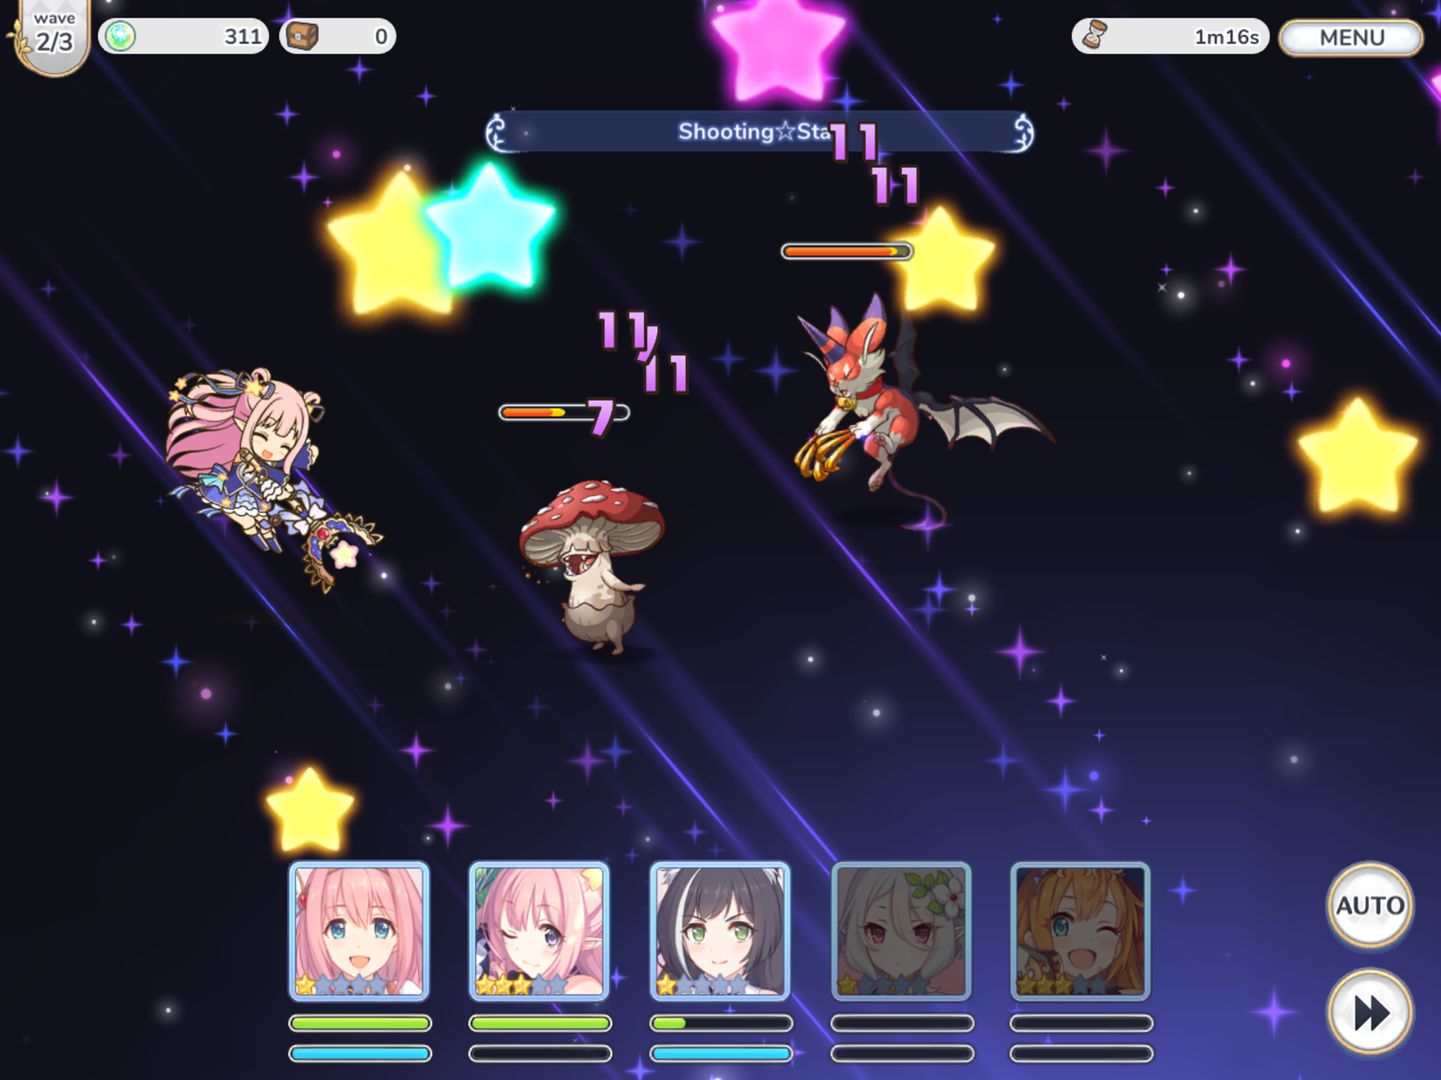 Screenshot of Princess Connect! Re: Dive